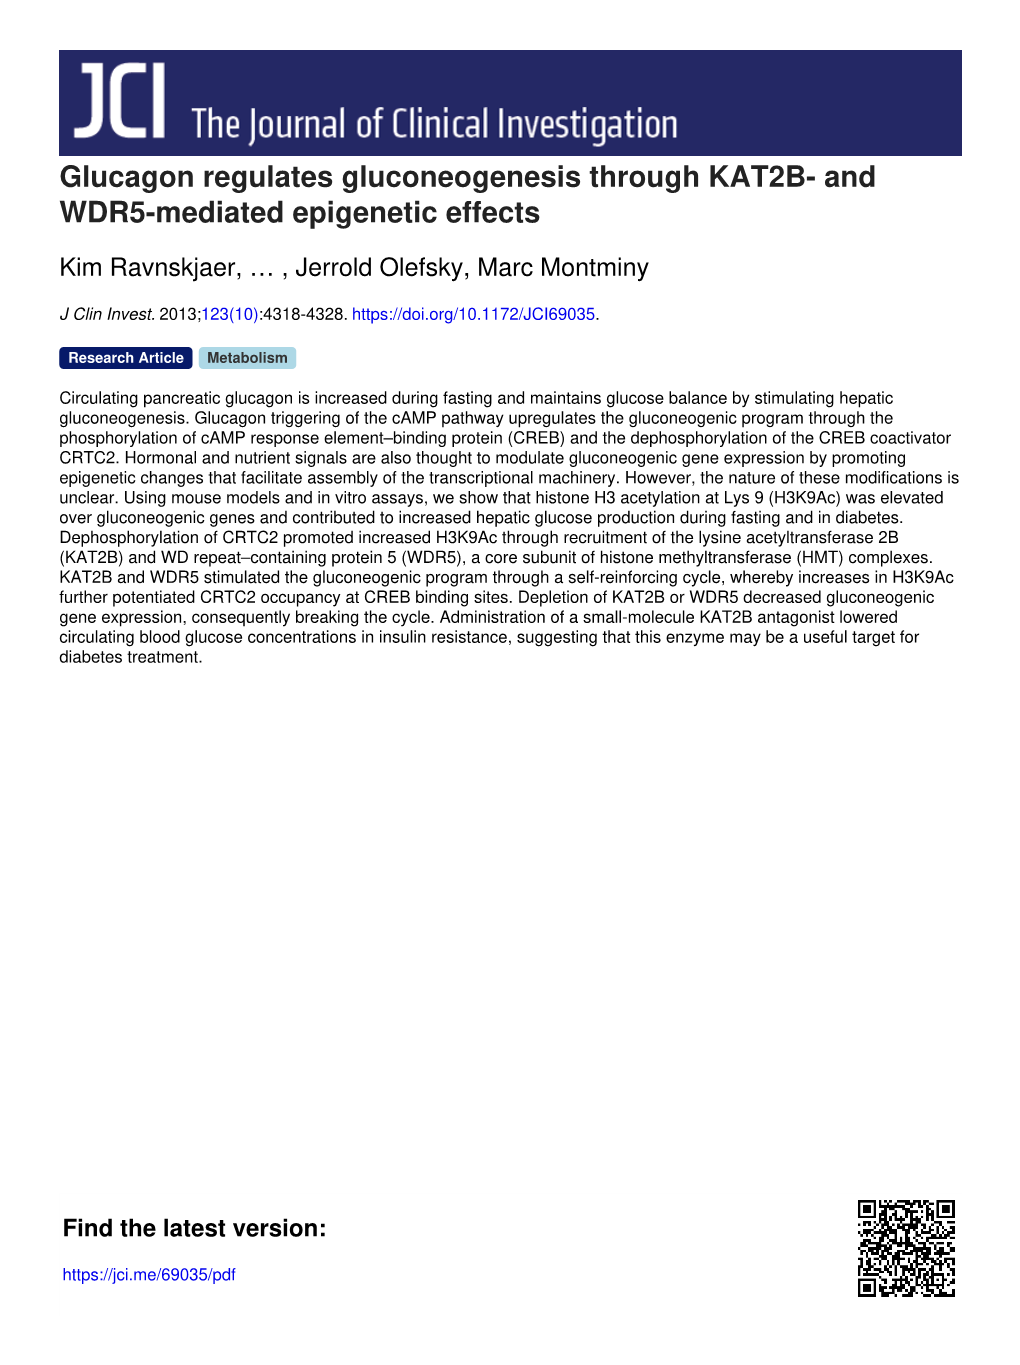 Glucagon Regulates Gluconeogenesis Through KAT2B- and WDR5-Mediated Epigenetic Effects